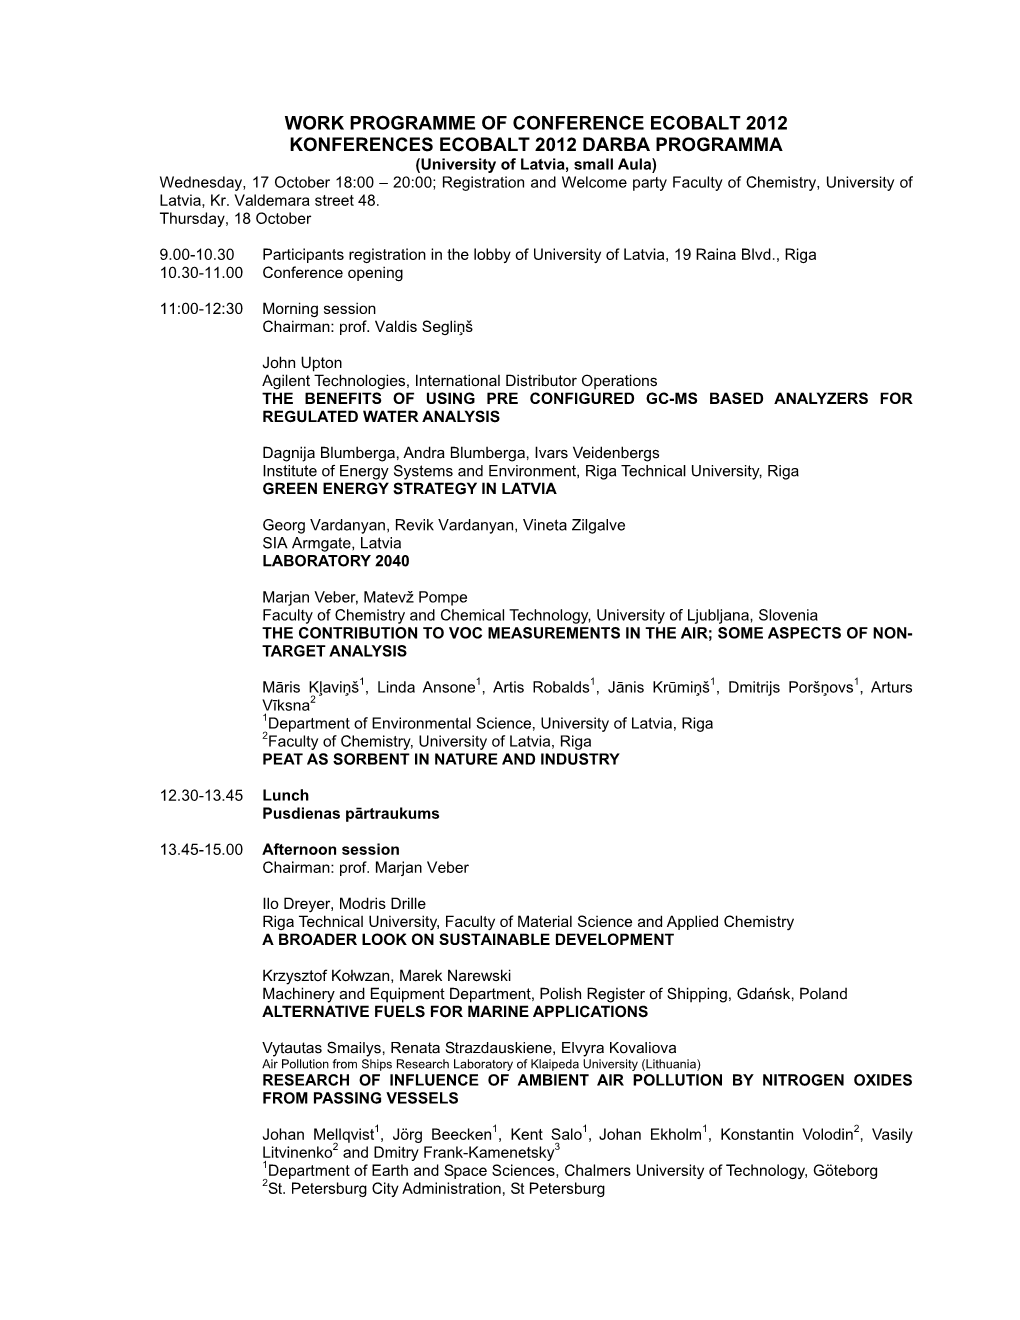 Work Programme of Conference Ecobalt 2012